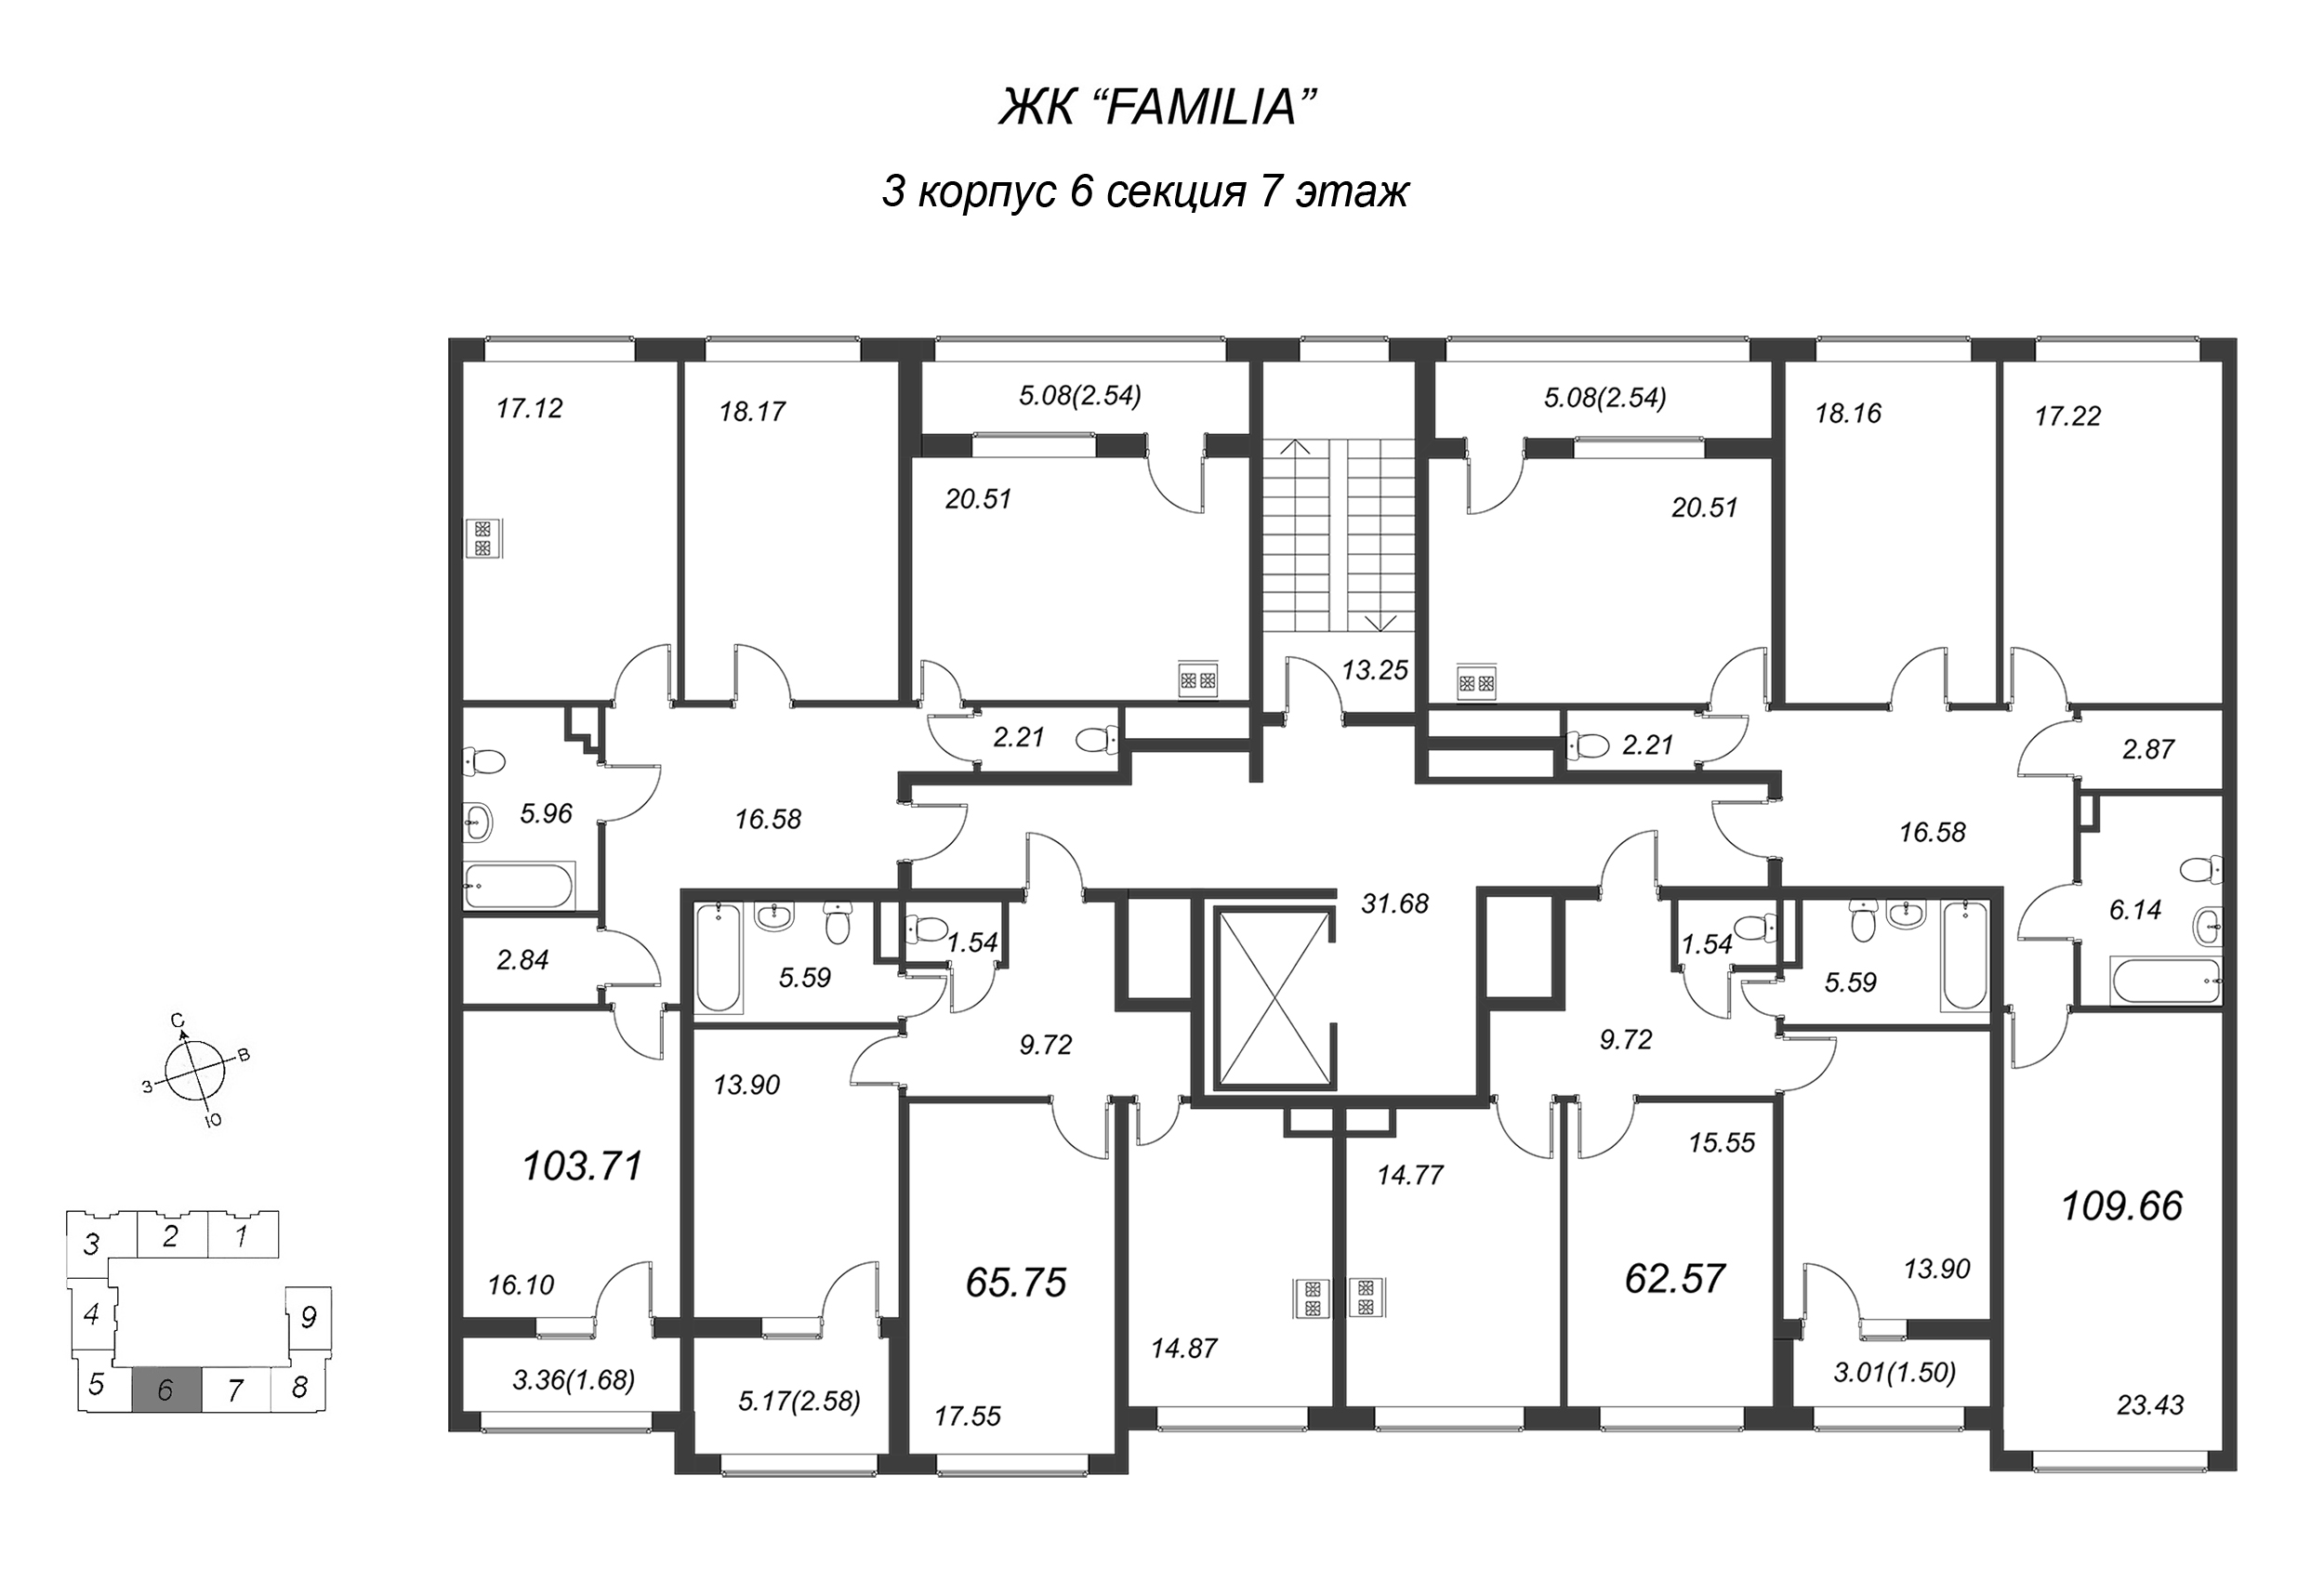 4-комнатная (Евро) квартира, 110.1 м² в ЖК "FAMILIA" - планировка этажа